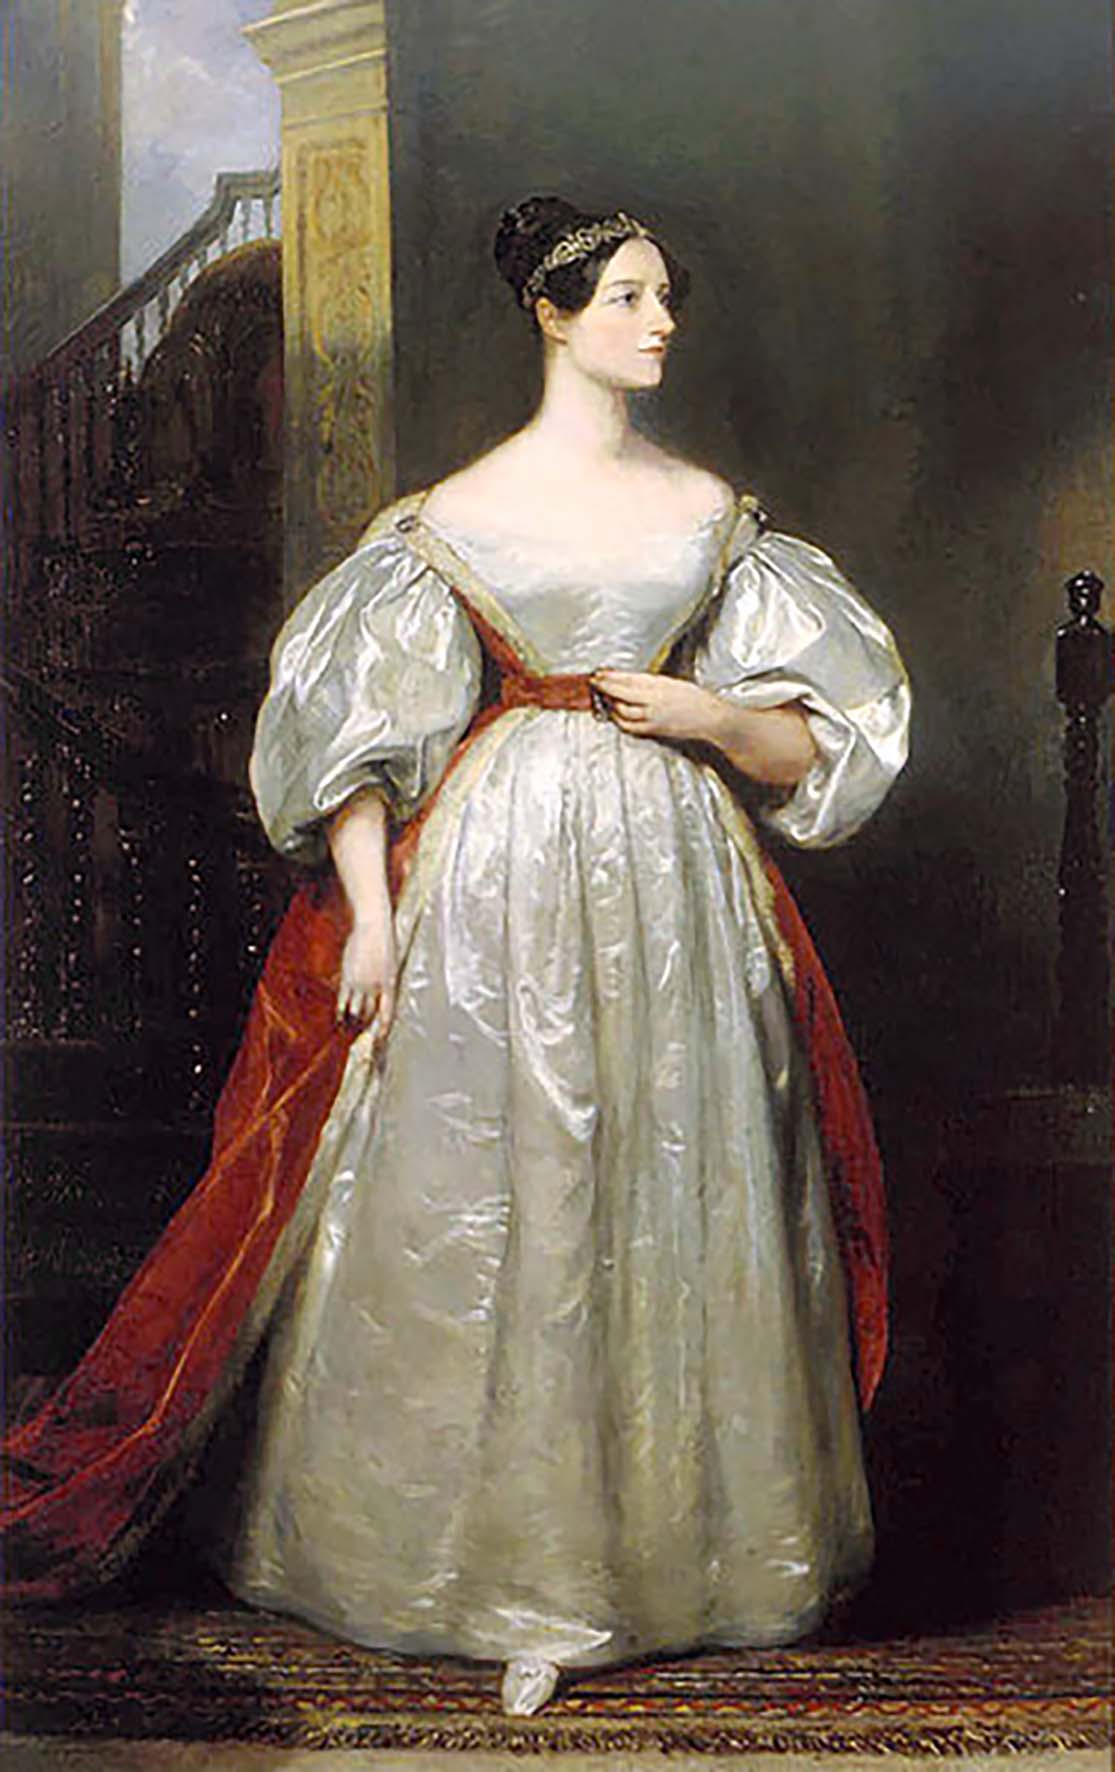 Ada, 1st Countess of Lovelace